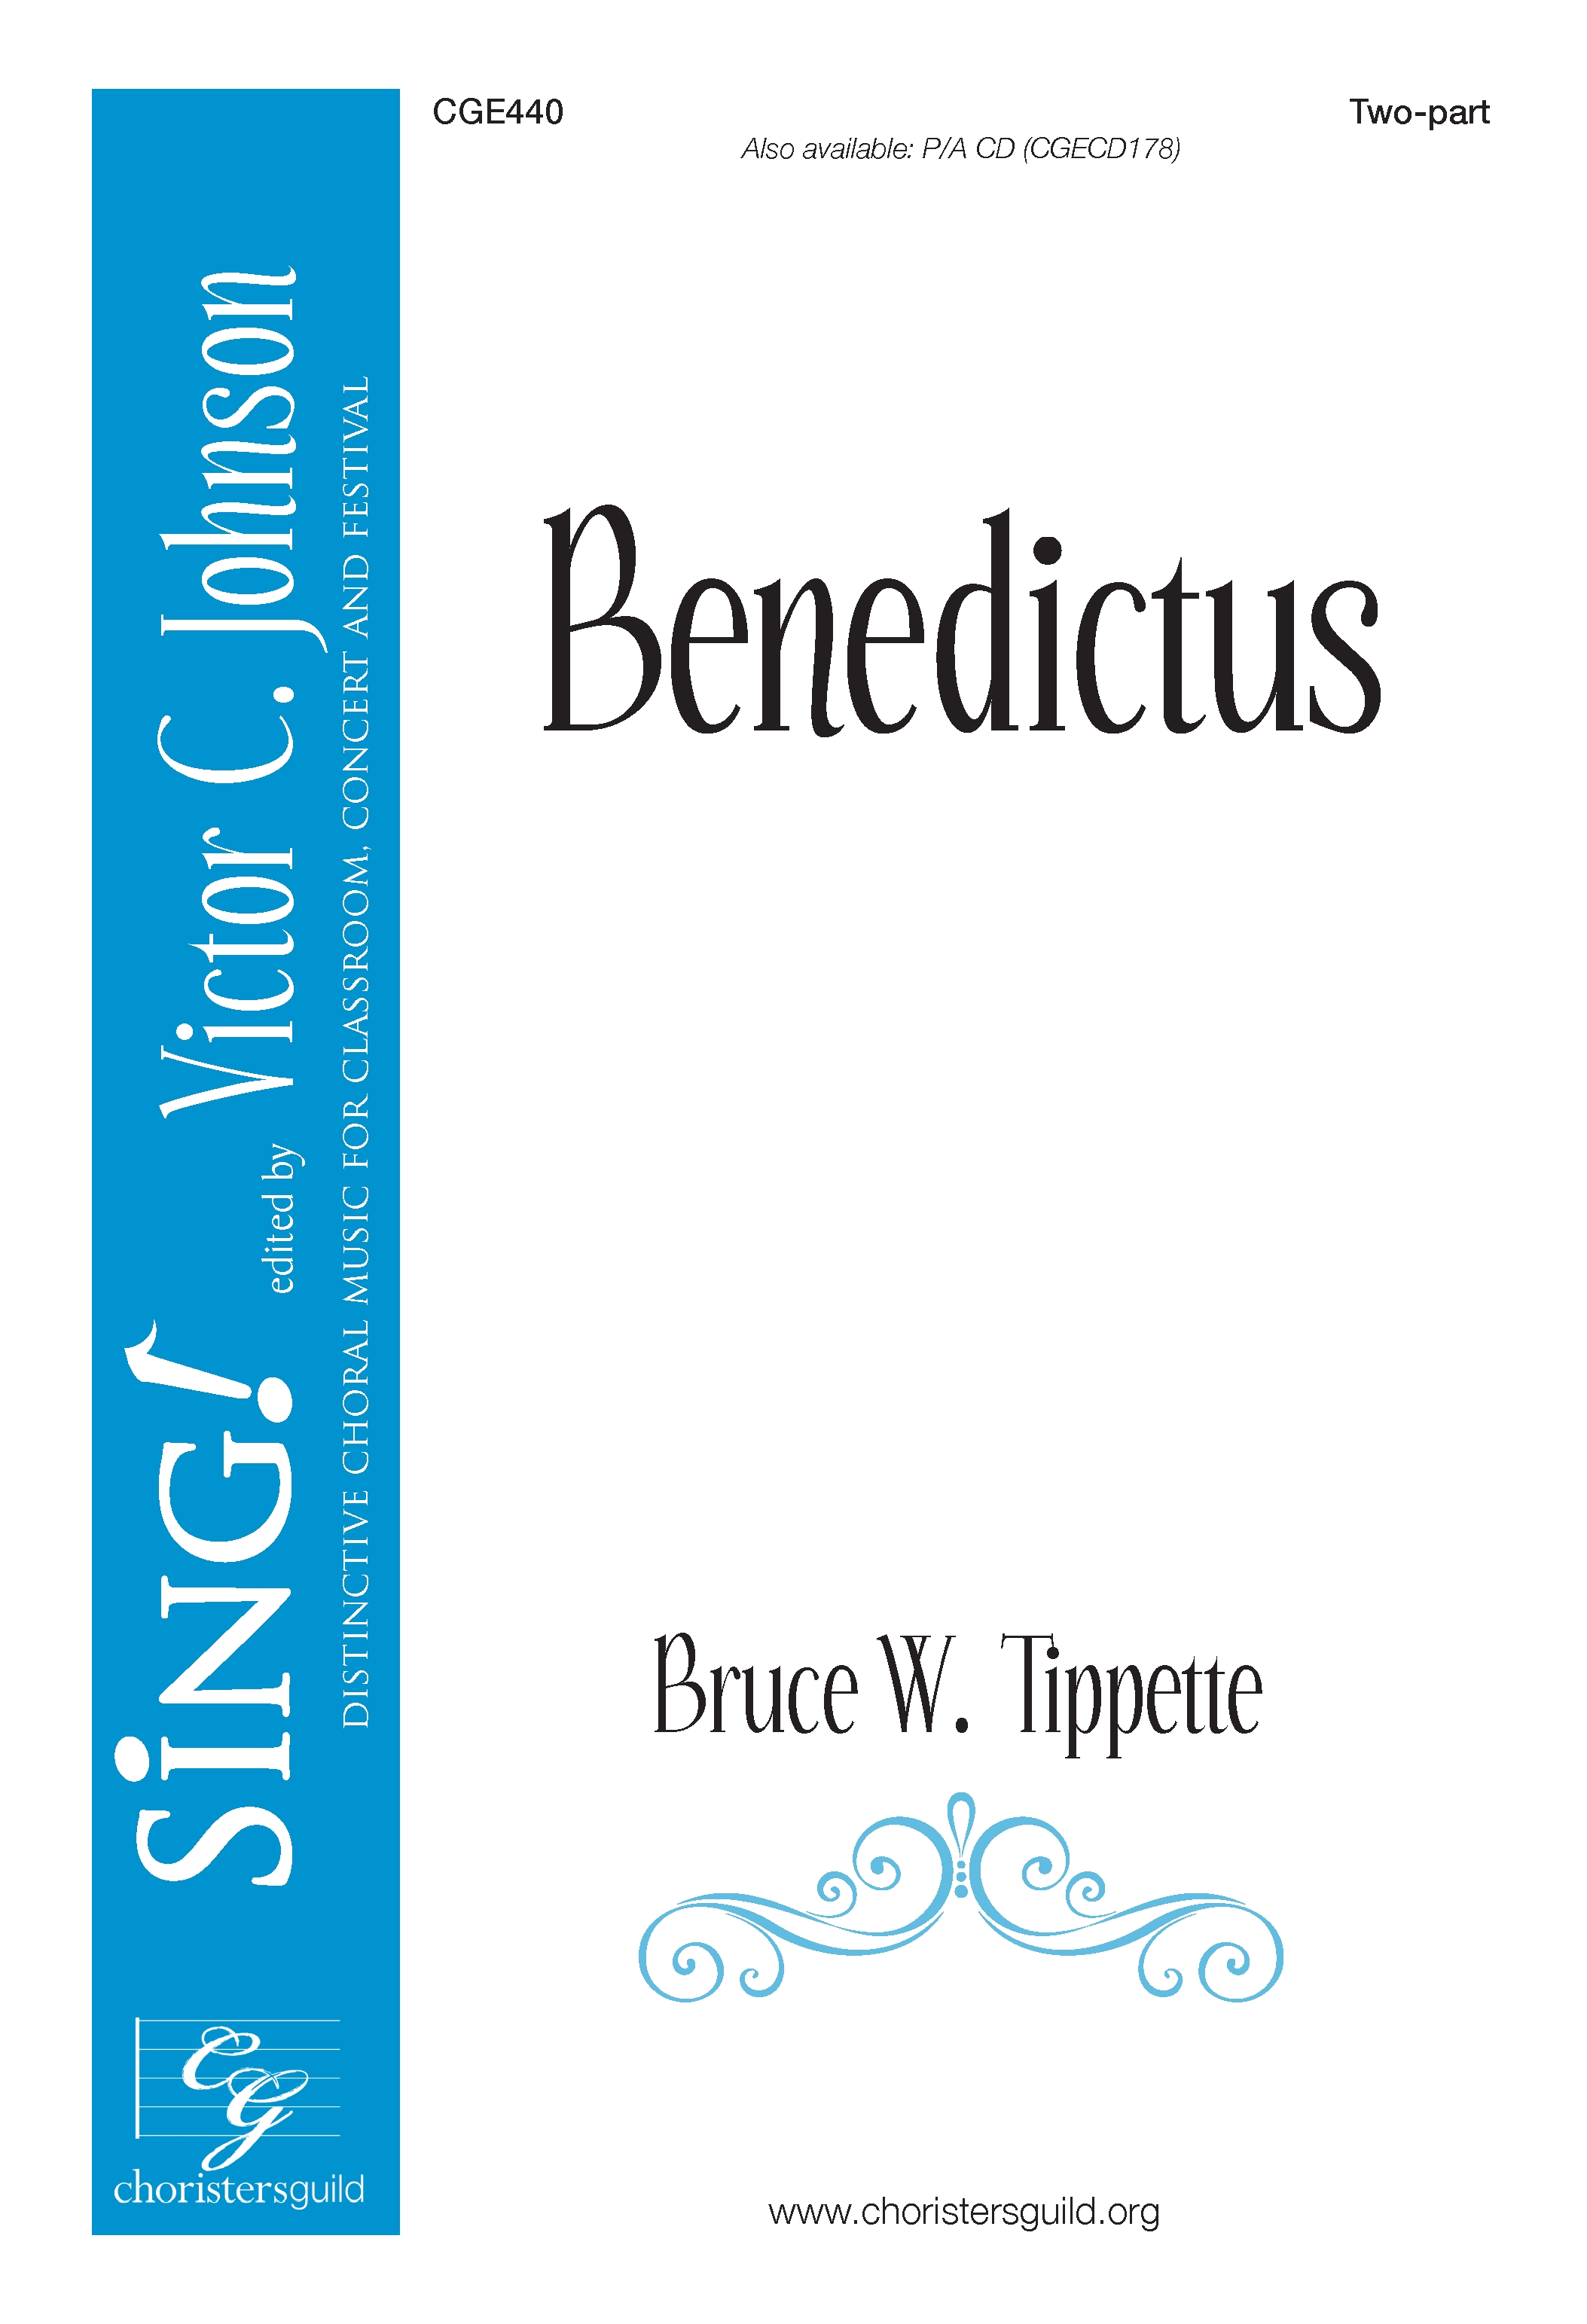 Benedictus - Two-part